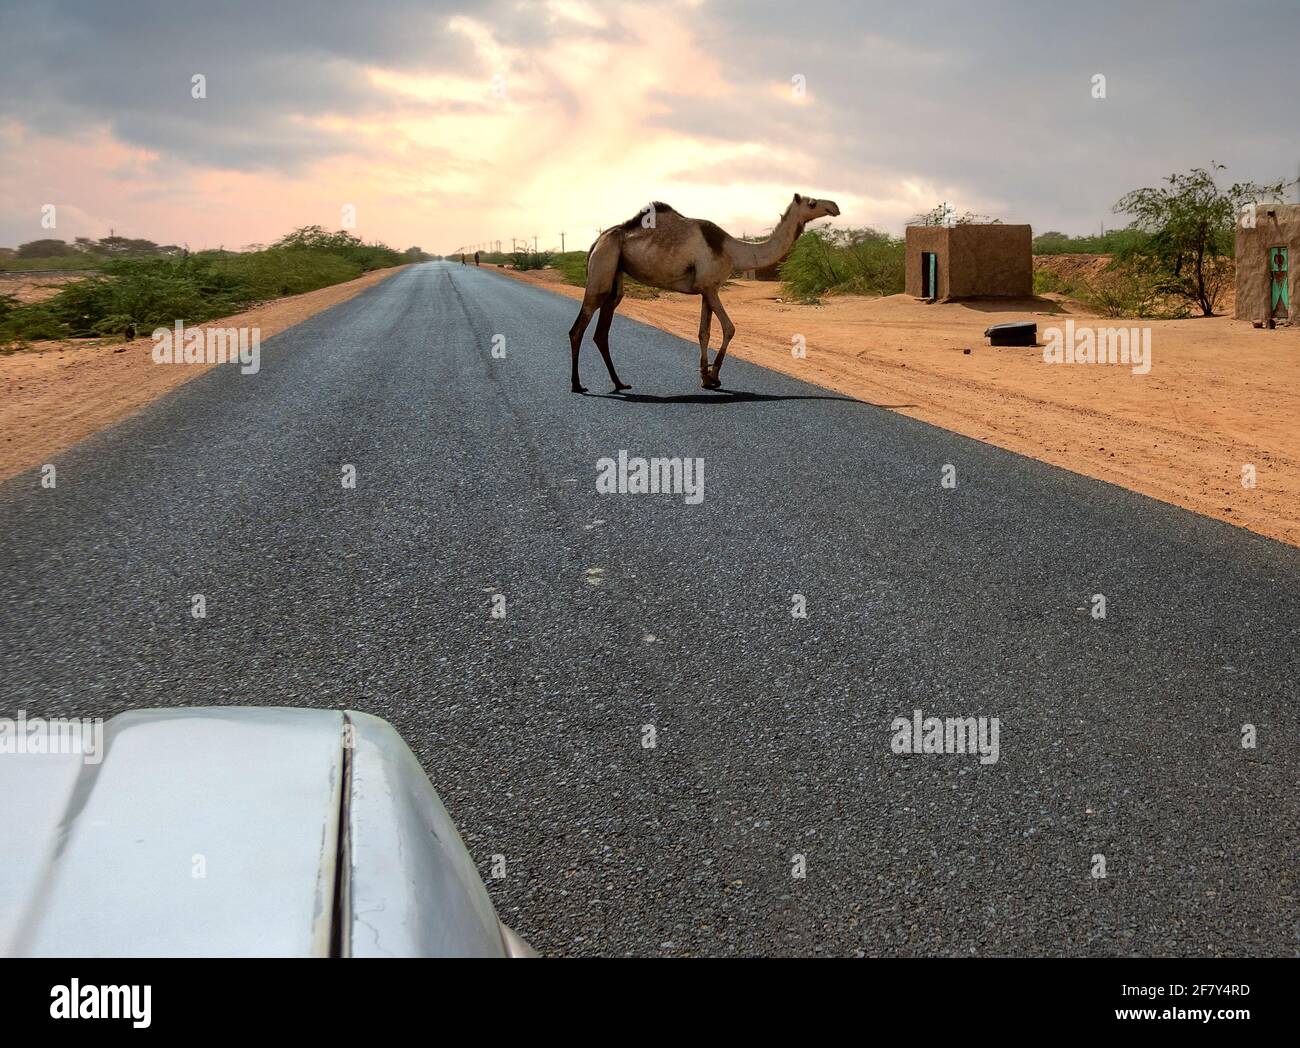 Semi-wild camel running across an asphalted road, Sudan Stock Photo